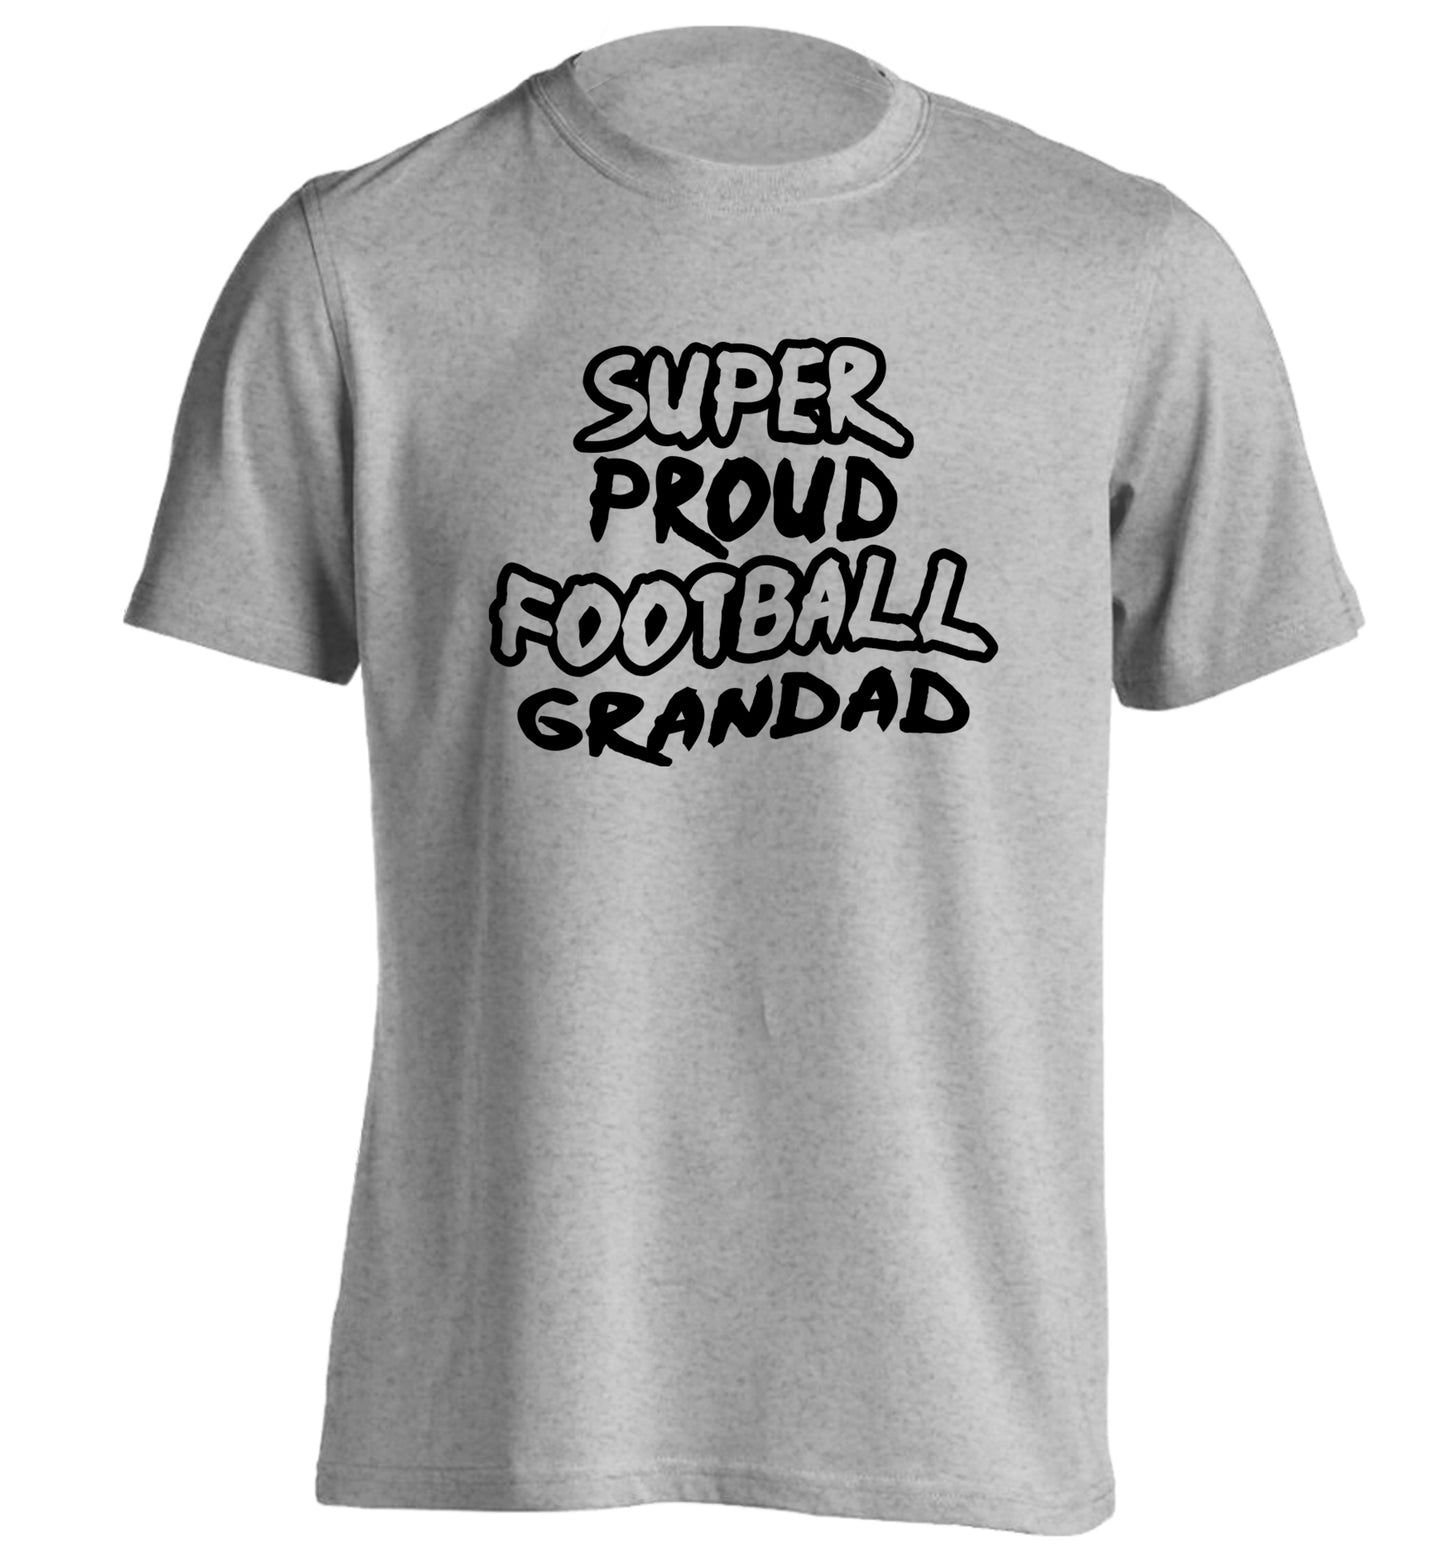 Super proud football grandad adults unisexgrey Tshirt 2XL